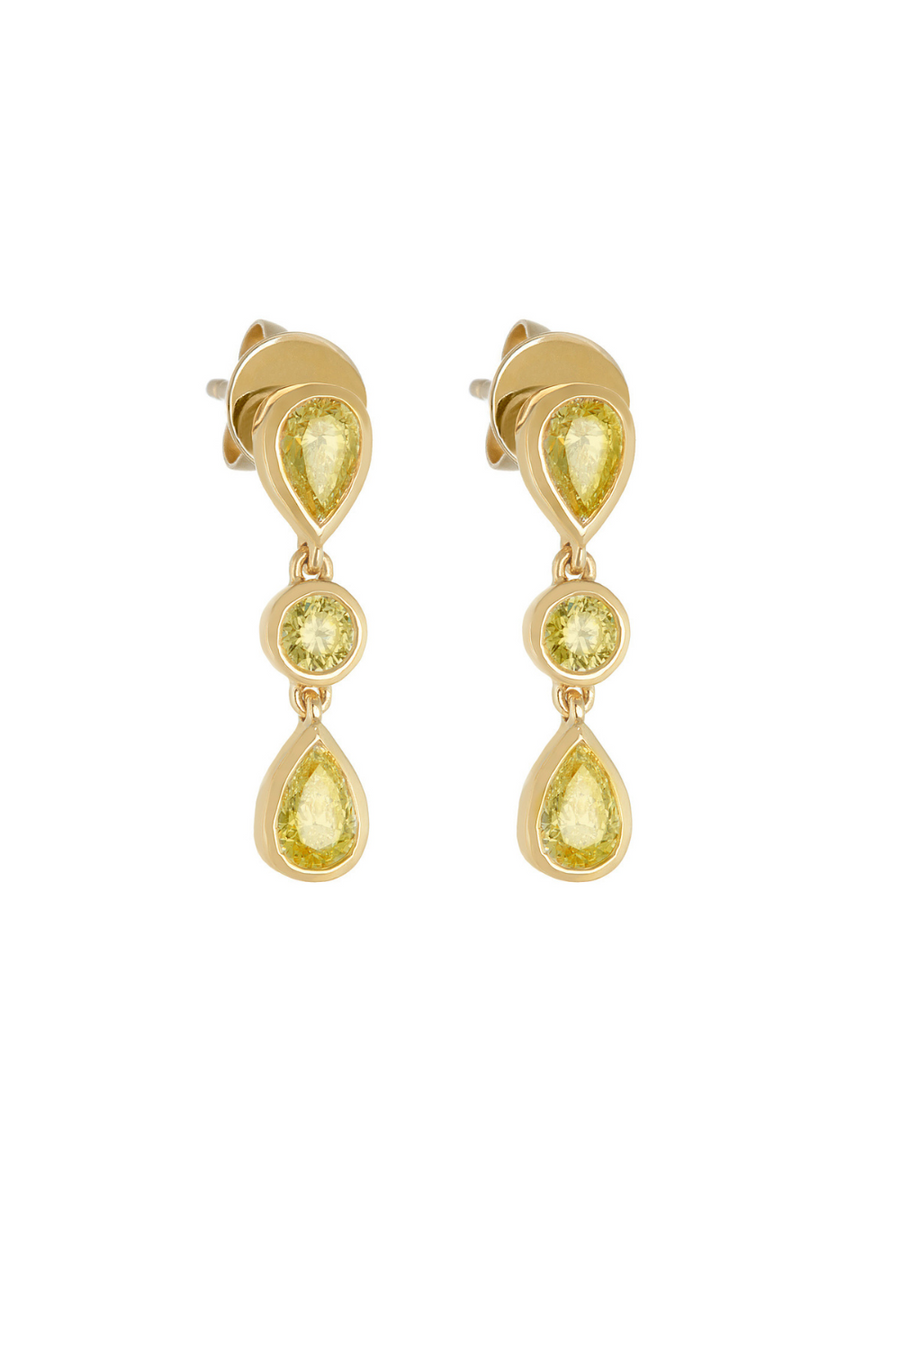 Yellow Sapphire Classic 'Raindrop' Earrings in 18k Gold